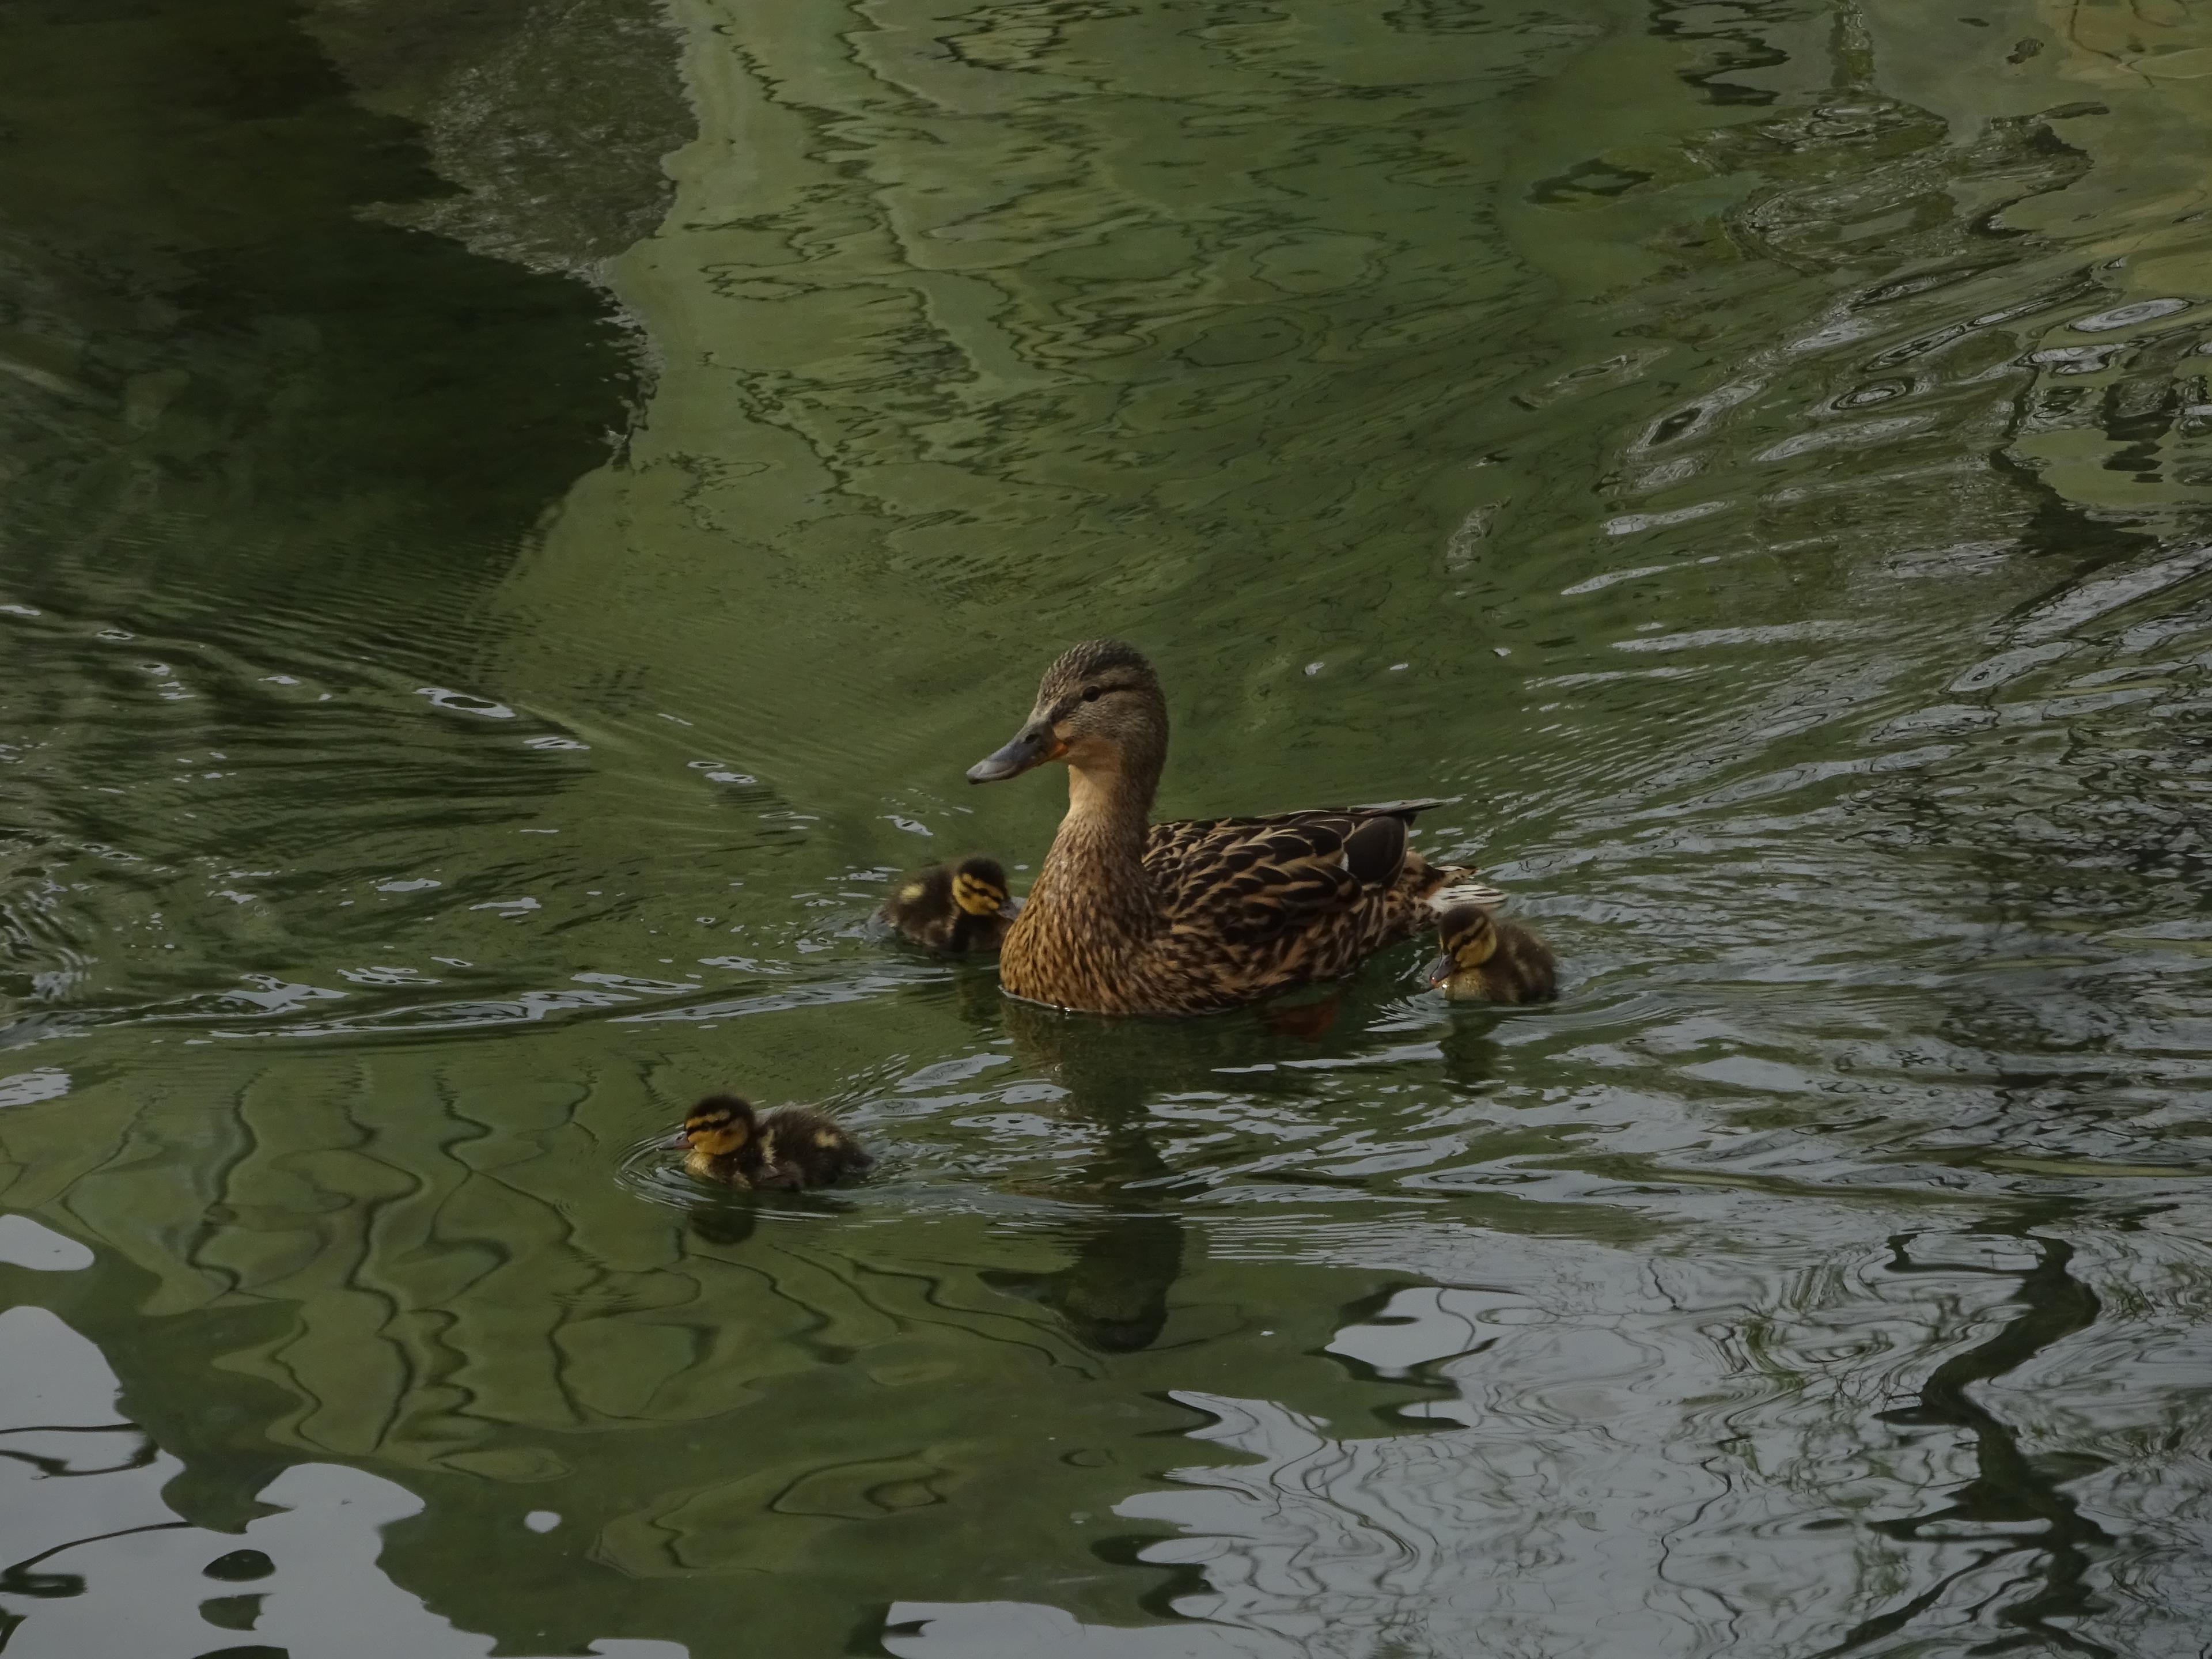 Beautiful Ducks